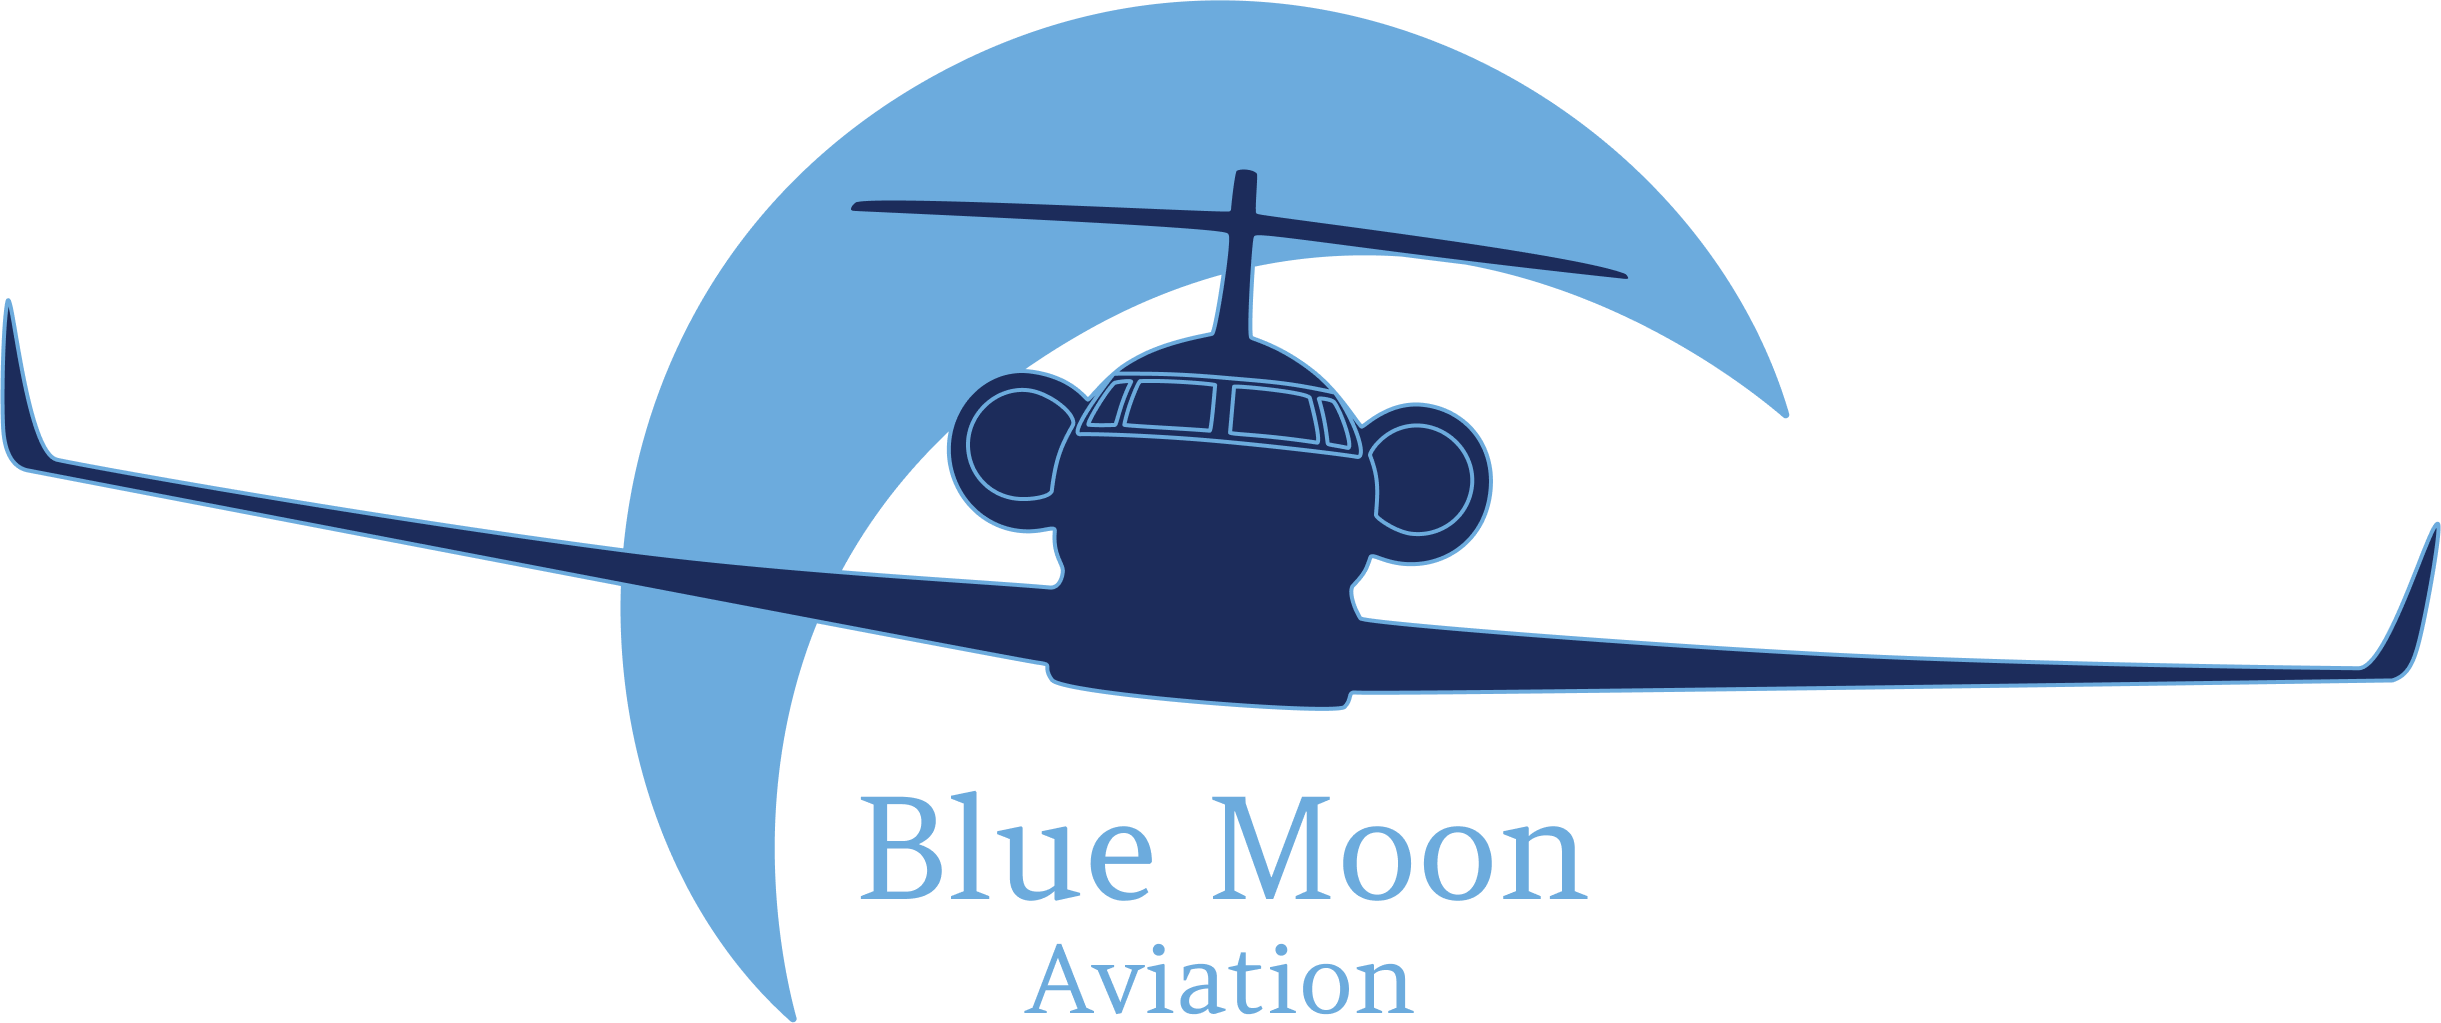 blue moon aviation logo